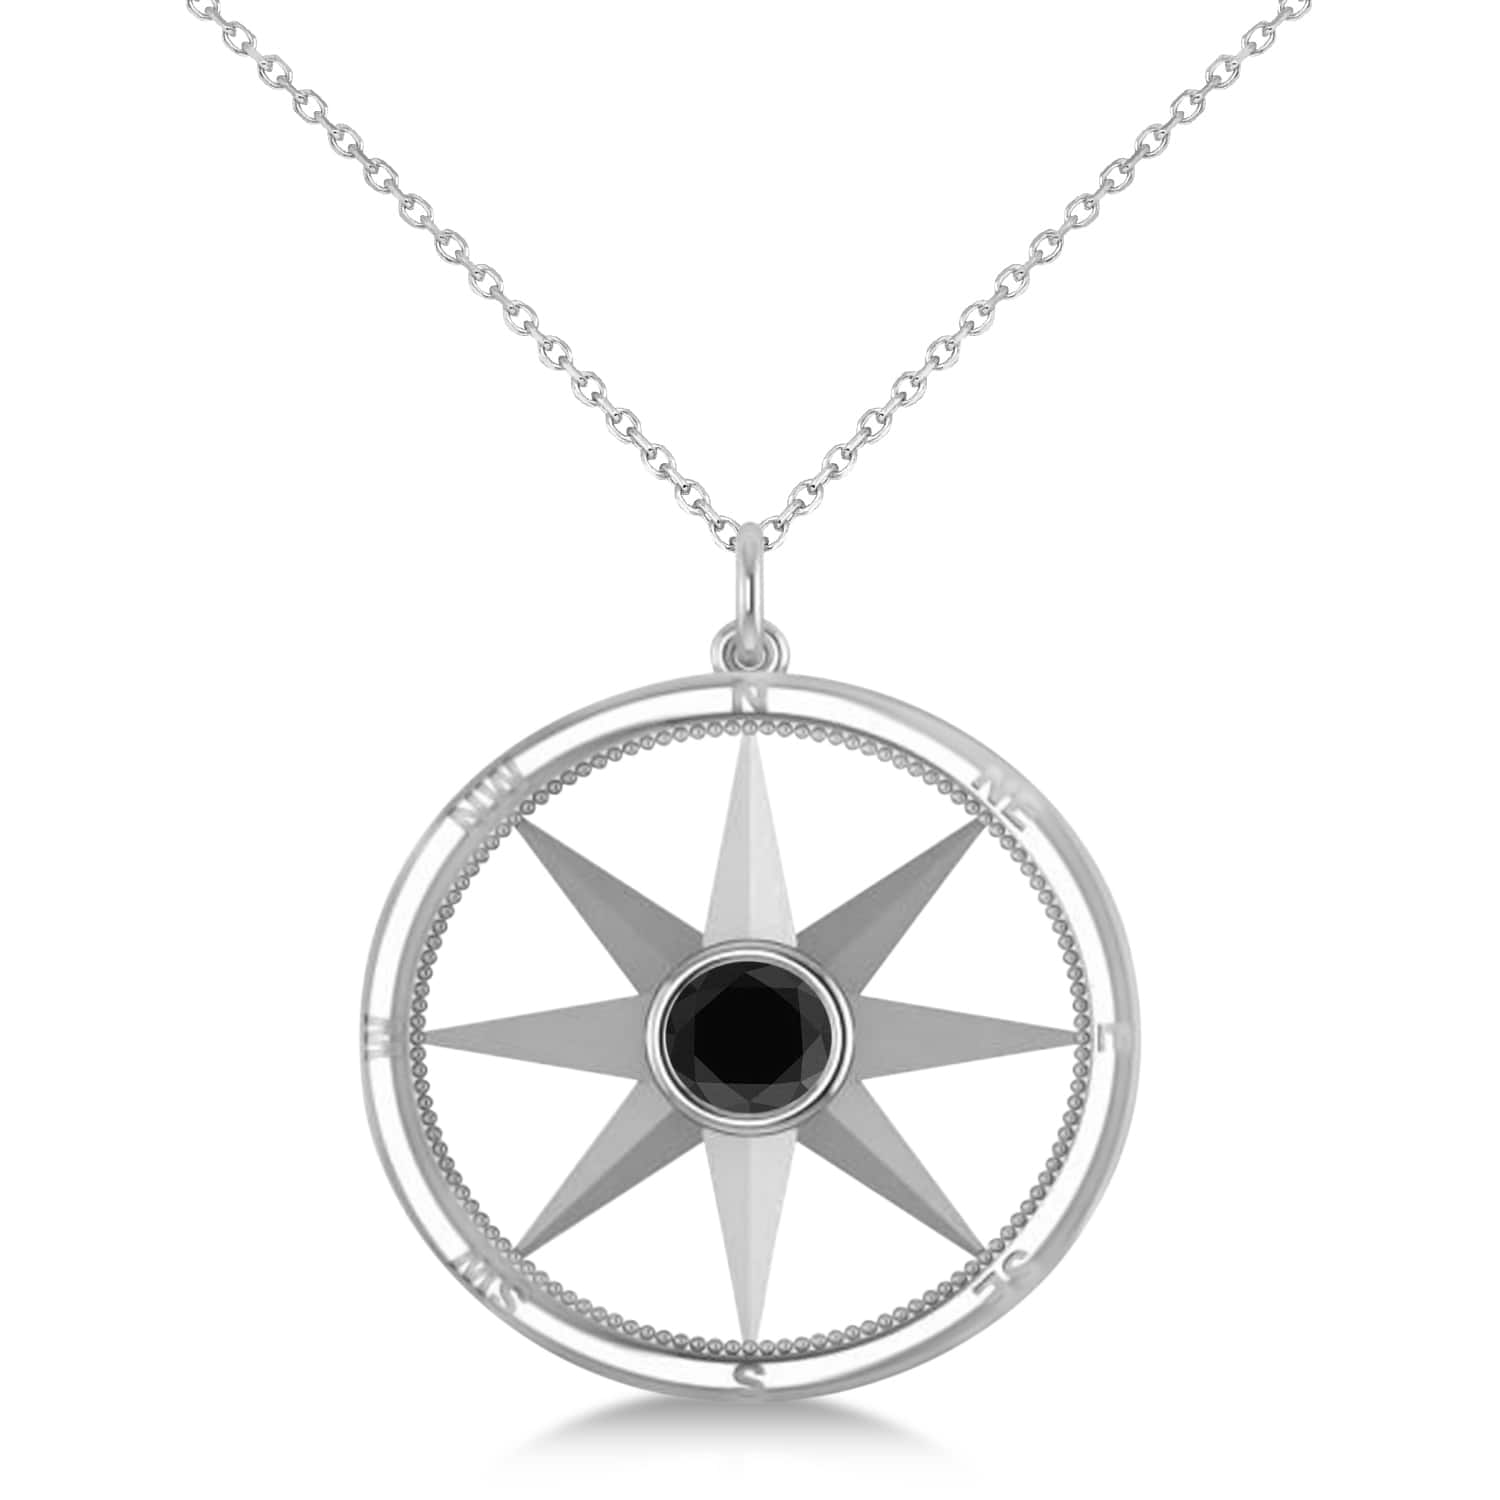 Black Diamond Compass Pendant Fashion Necklace 14k White Gold (0.66ct)